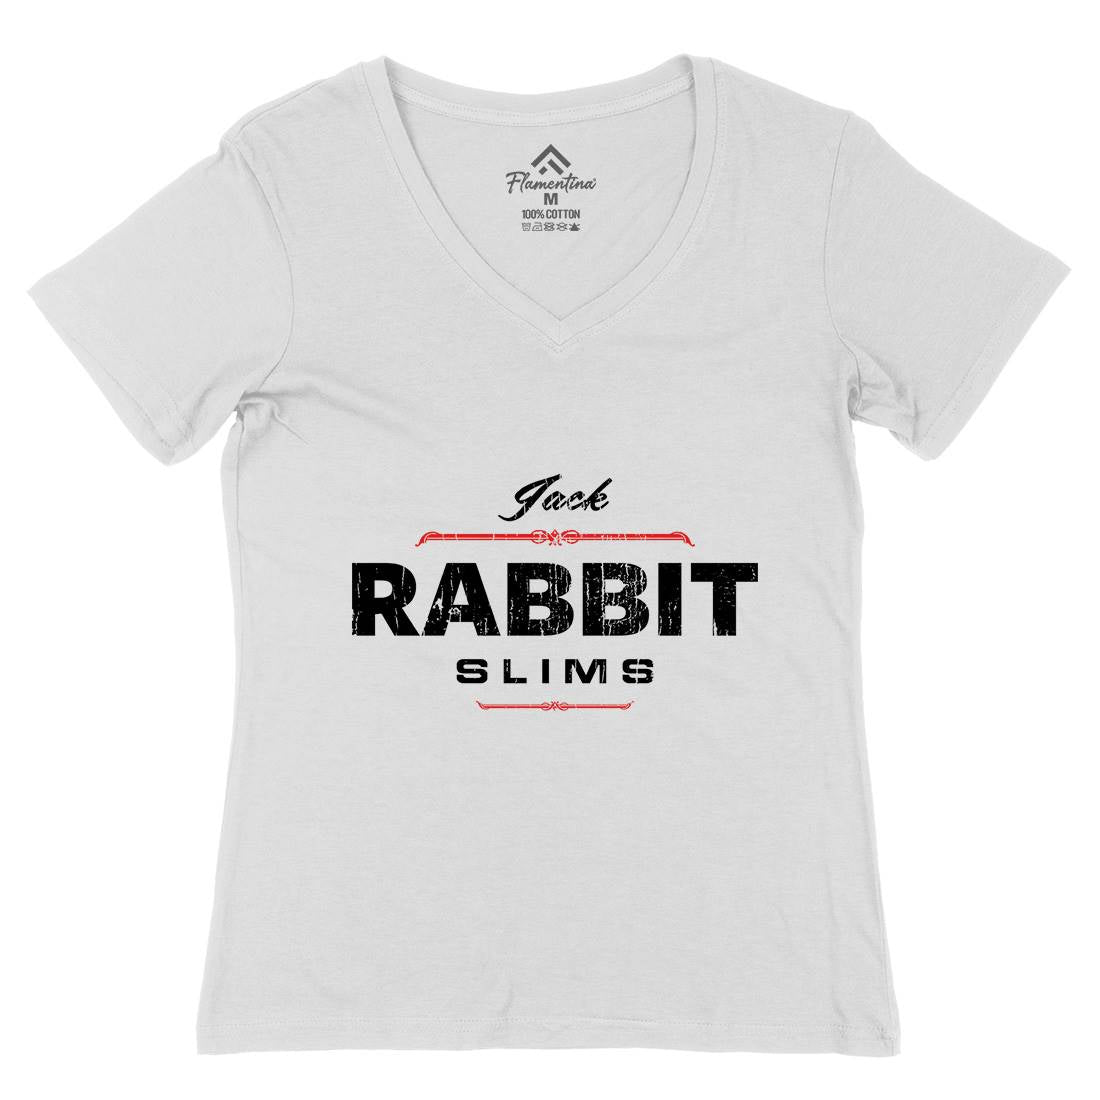 Jack Rabbit Slims Womens Organic V-Neck T-Shirt Retro D383